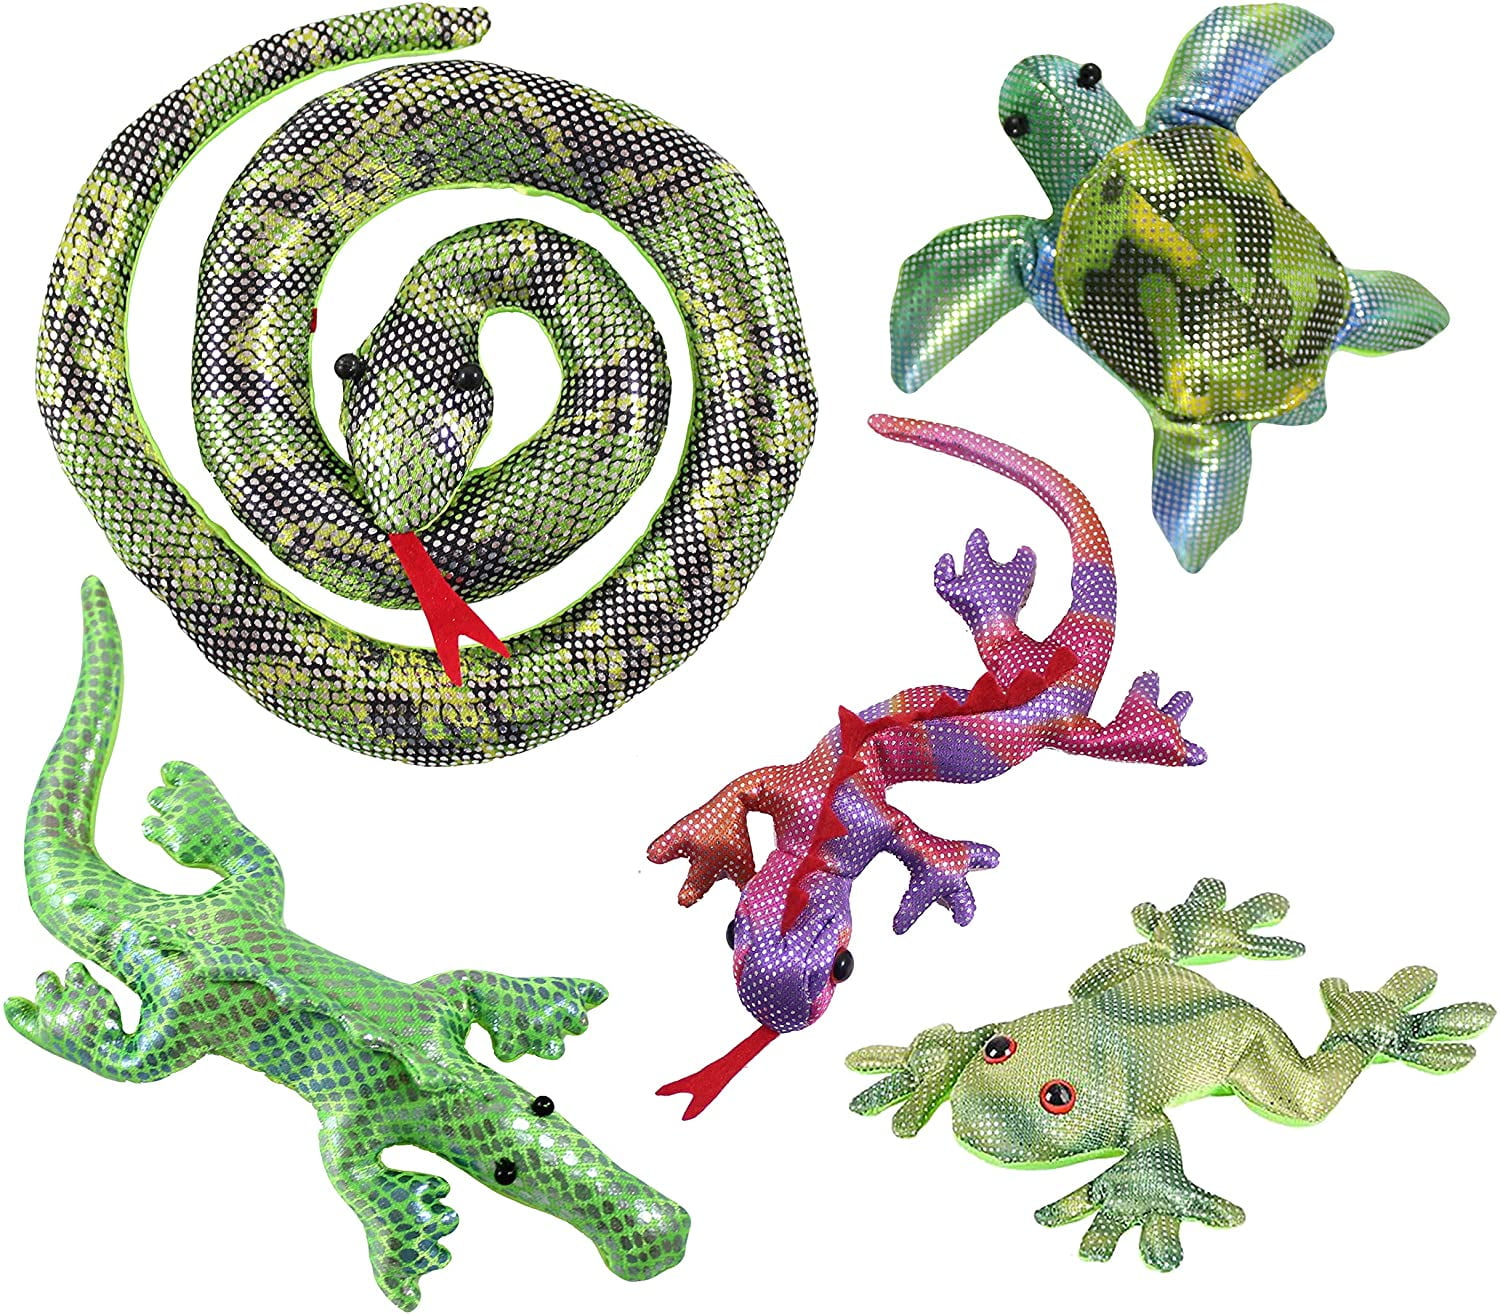 5 Reptile Set - Sand Filled Animal Toy - Snake, Turtle, Lizard, Alligator, Frog- Heavy Weighted Sandbag Animal Plush Bean Bag Toss - Shimmering Glitter